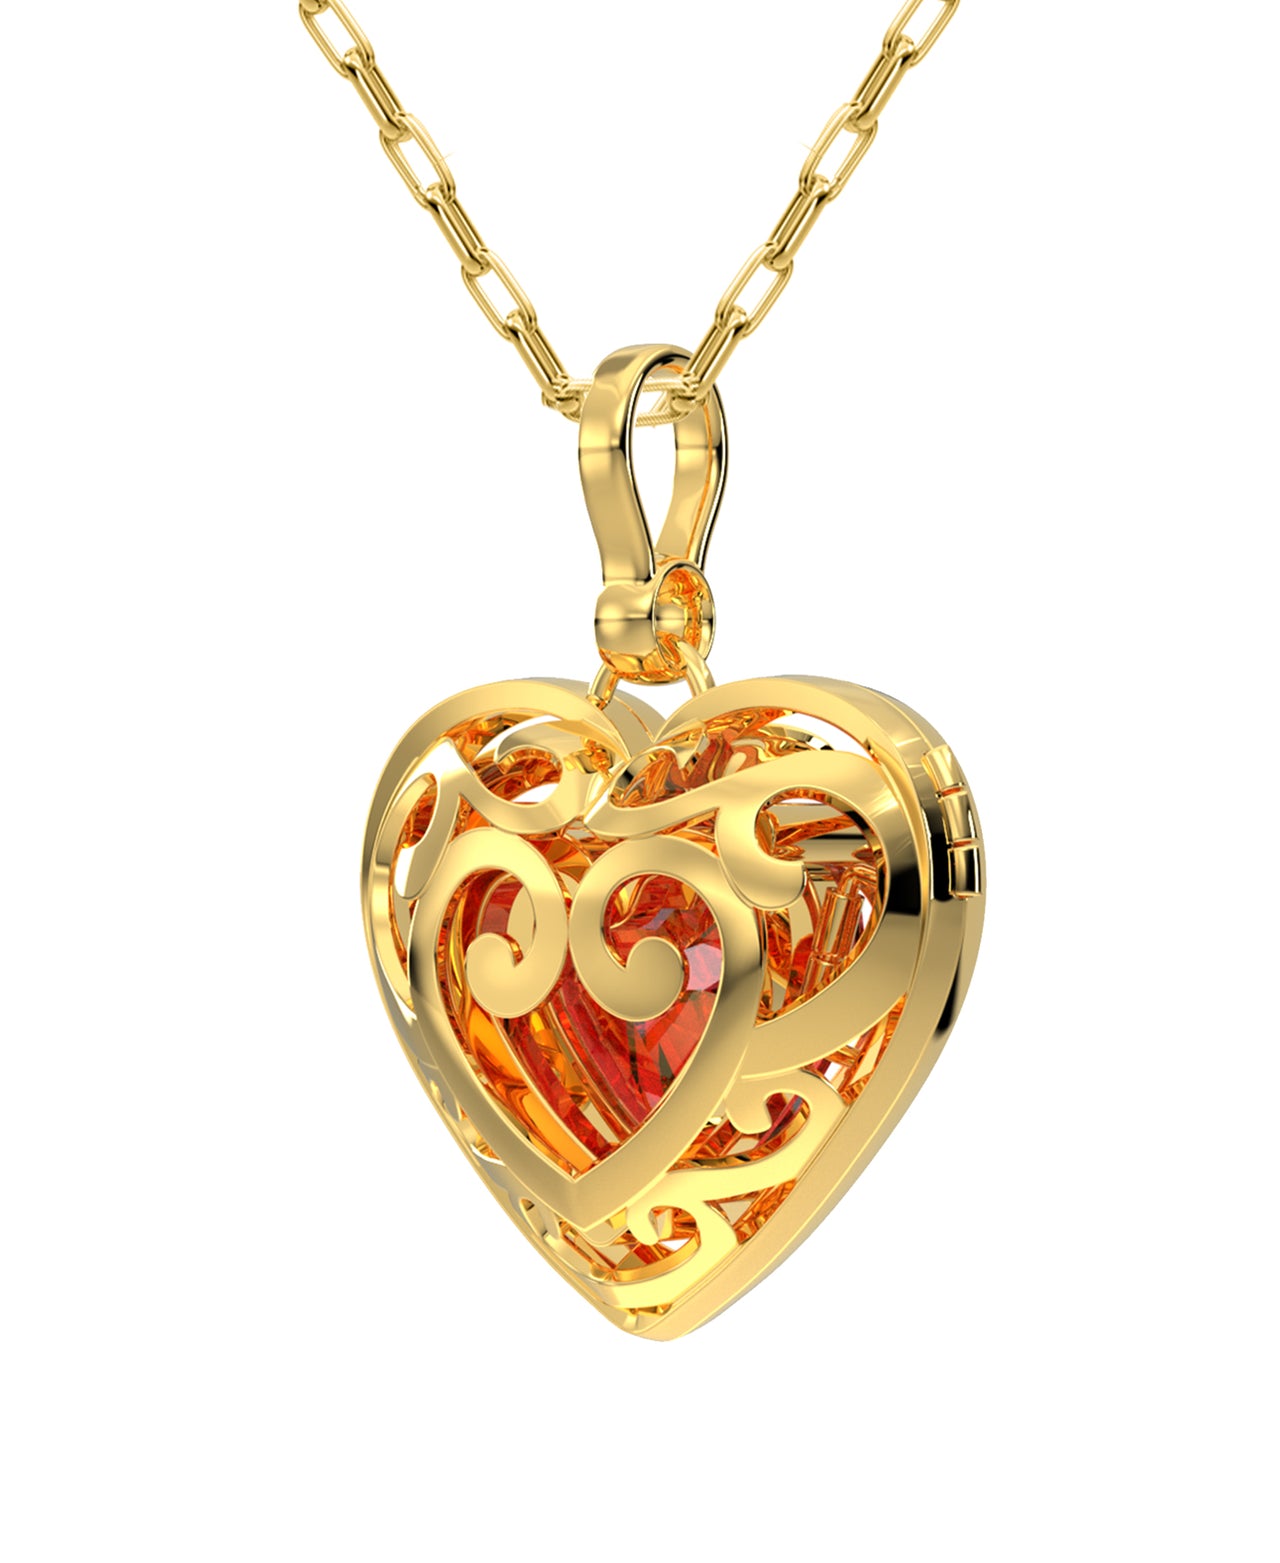 Ladies 14k Yellow Gold Polished Gemstone Heart Locket Pendant Necklace, 20mm